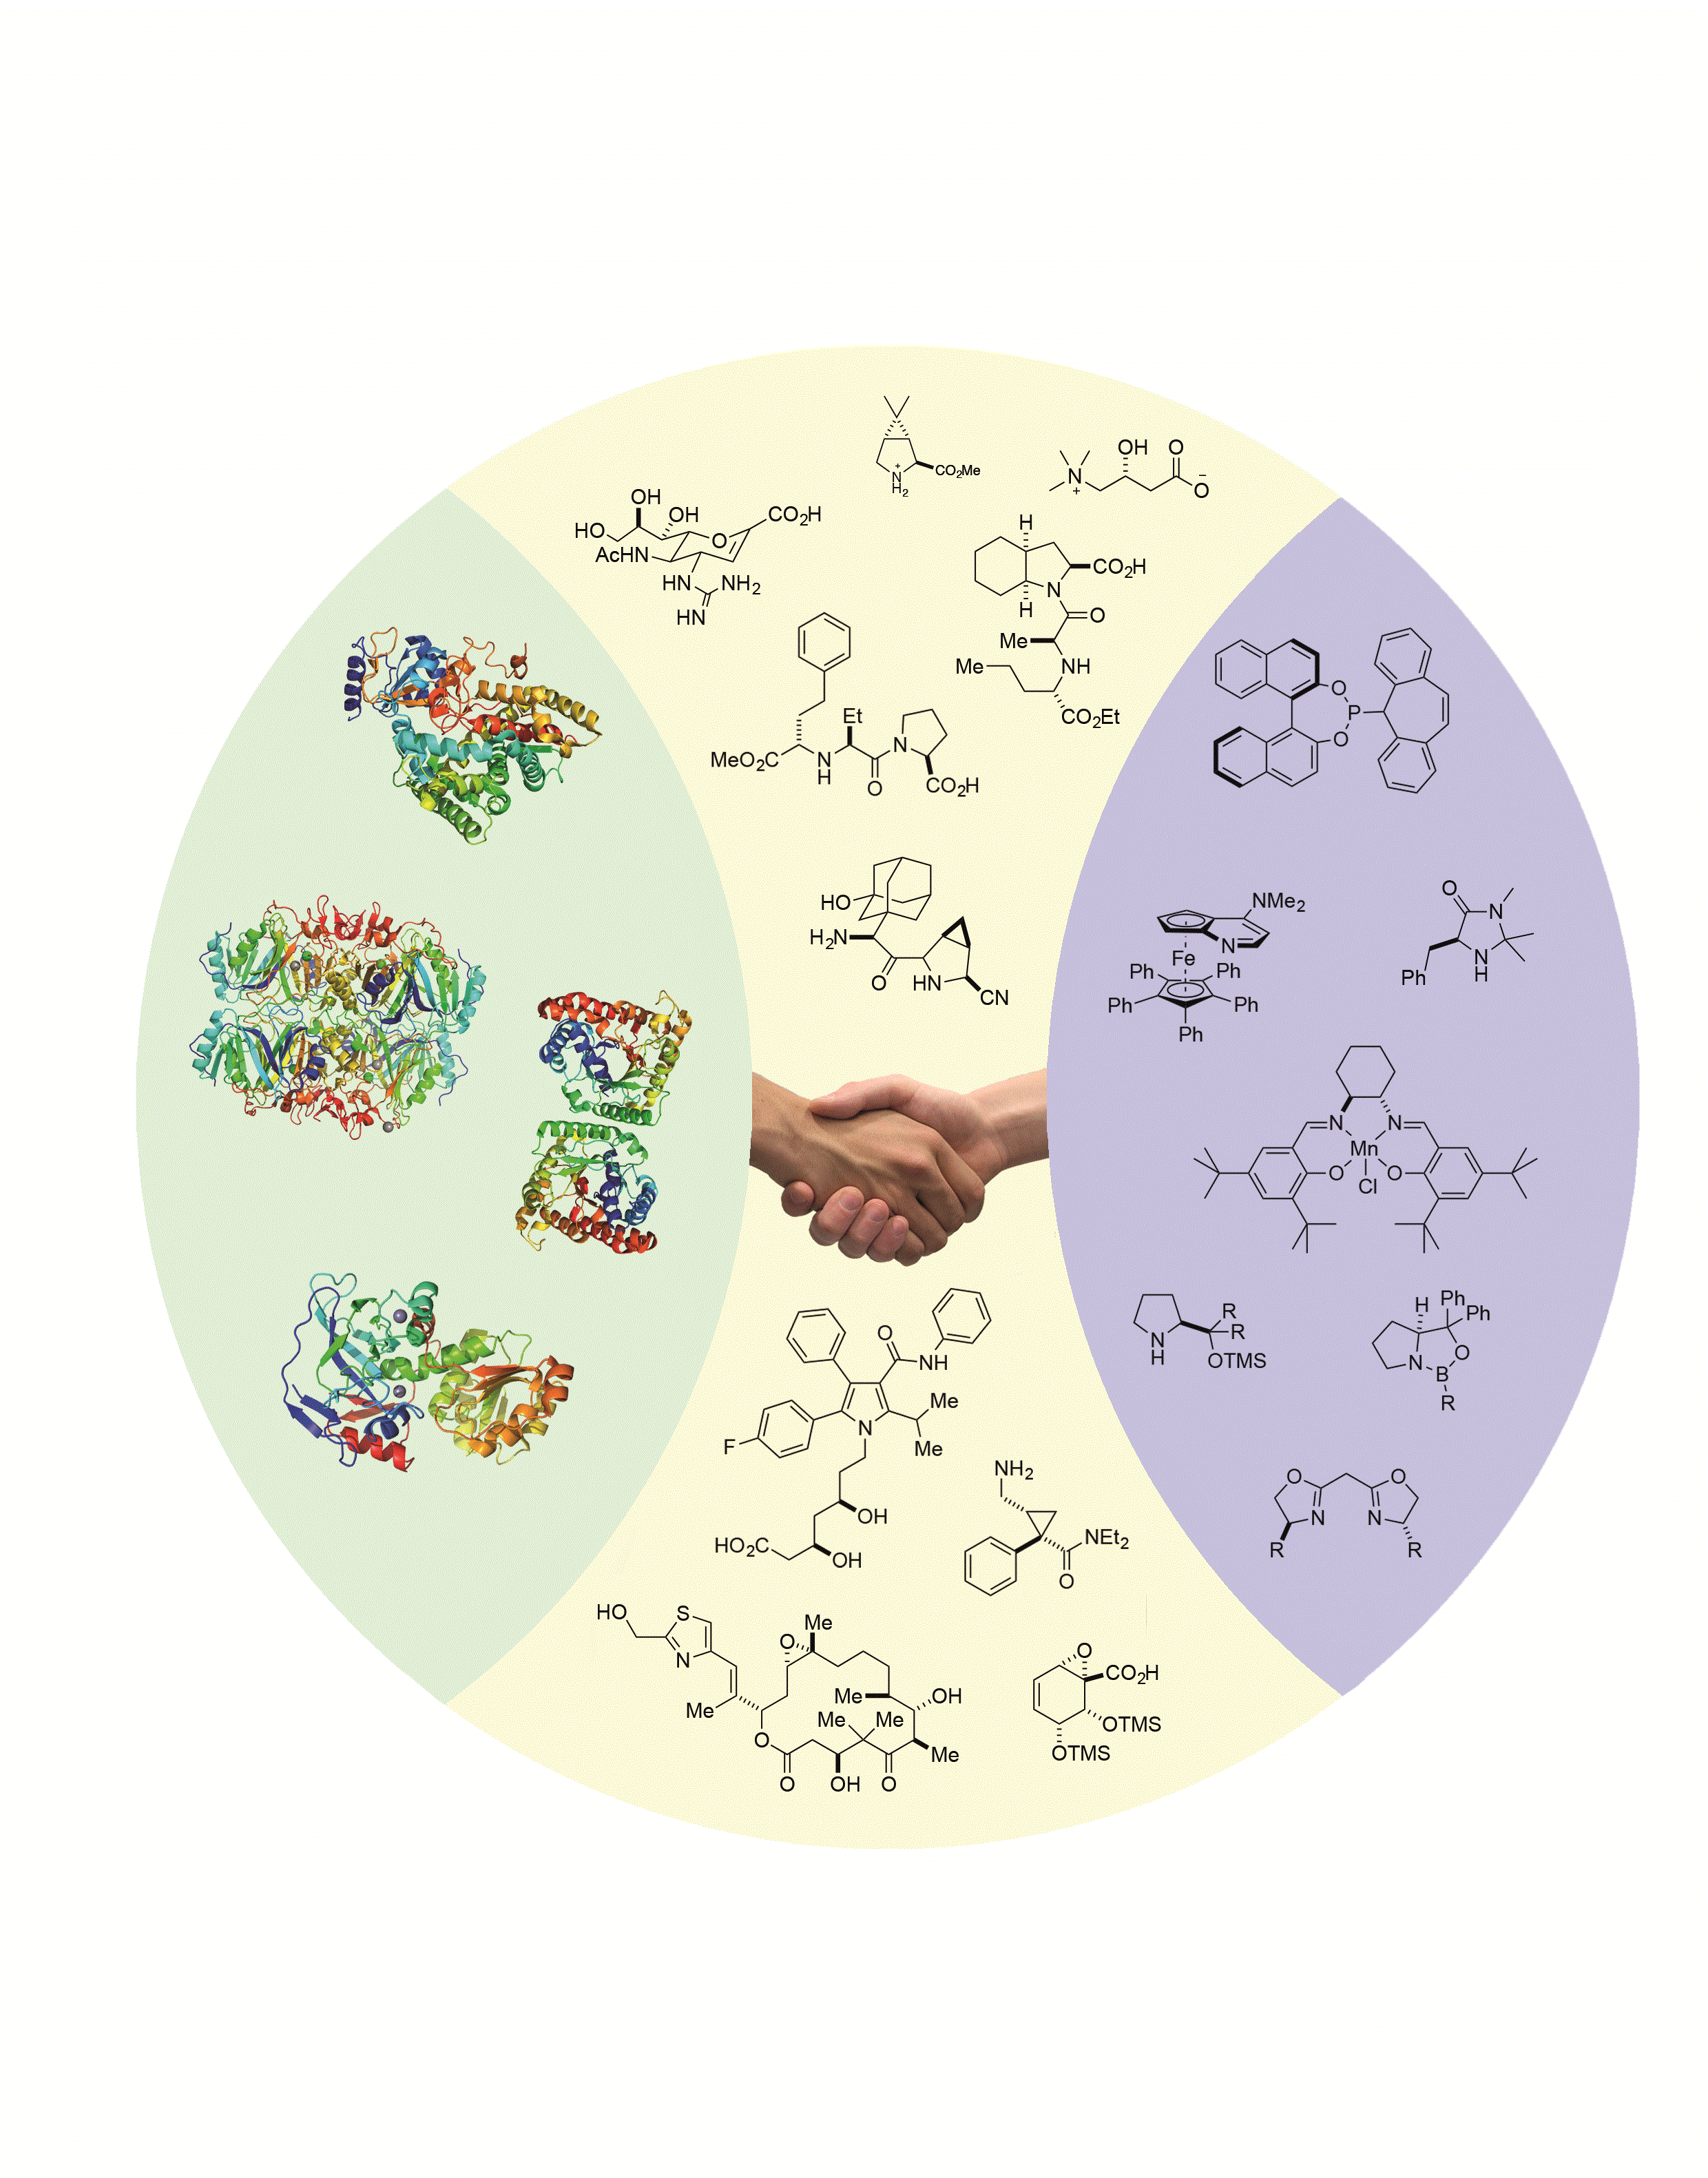 Enantioselective Chemo- and Biocatalysis: Partners in Retrosynthesis. E.M. Carreira, N. Turner, M. Hönig, P. Sondermann. Angew. Chem. Int. Ed. 2017